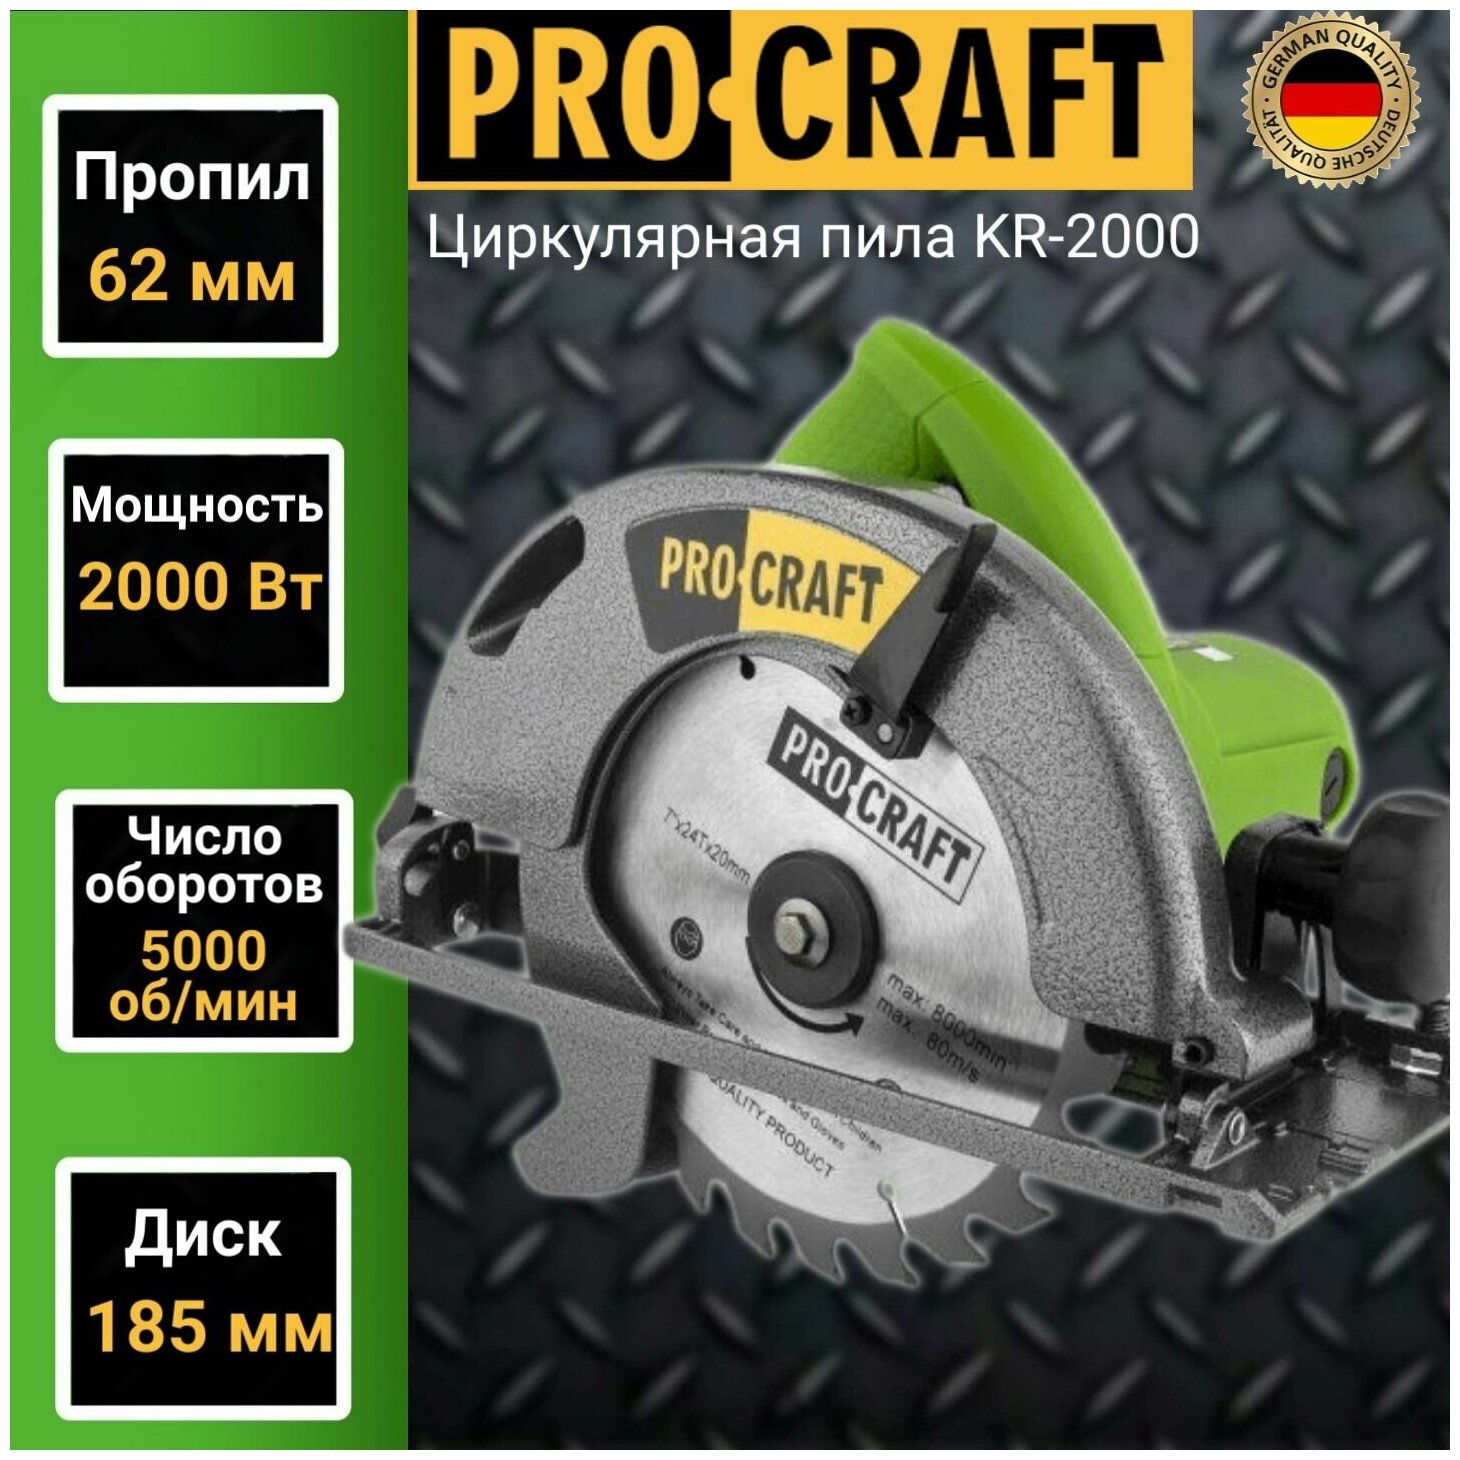 Циркулярная дисковая пила ProCraft KR2000 диск 185мм пропил 62мм 5000об/мин 2000Вт